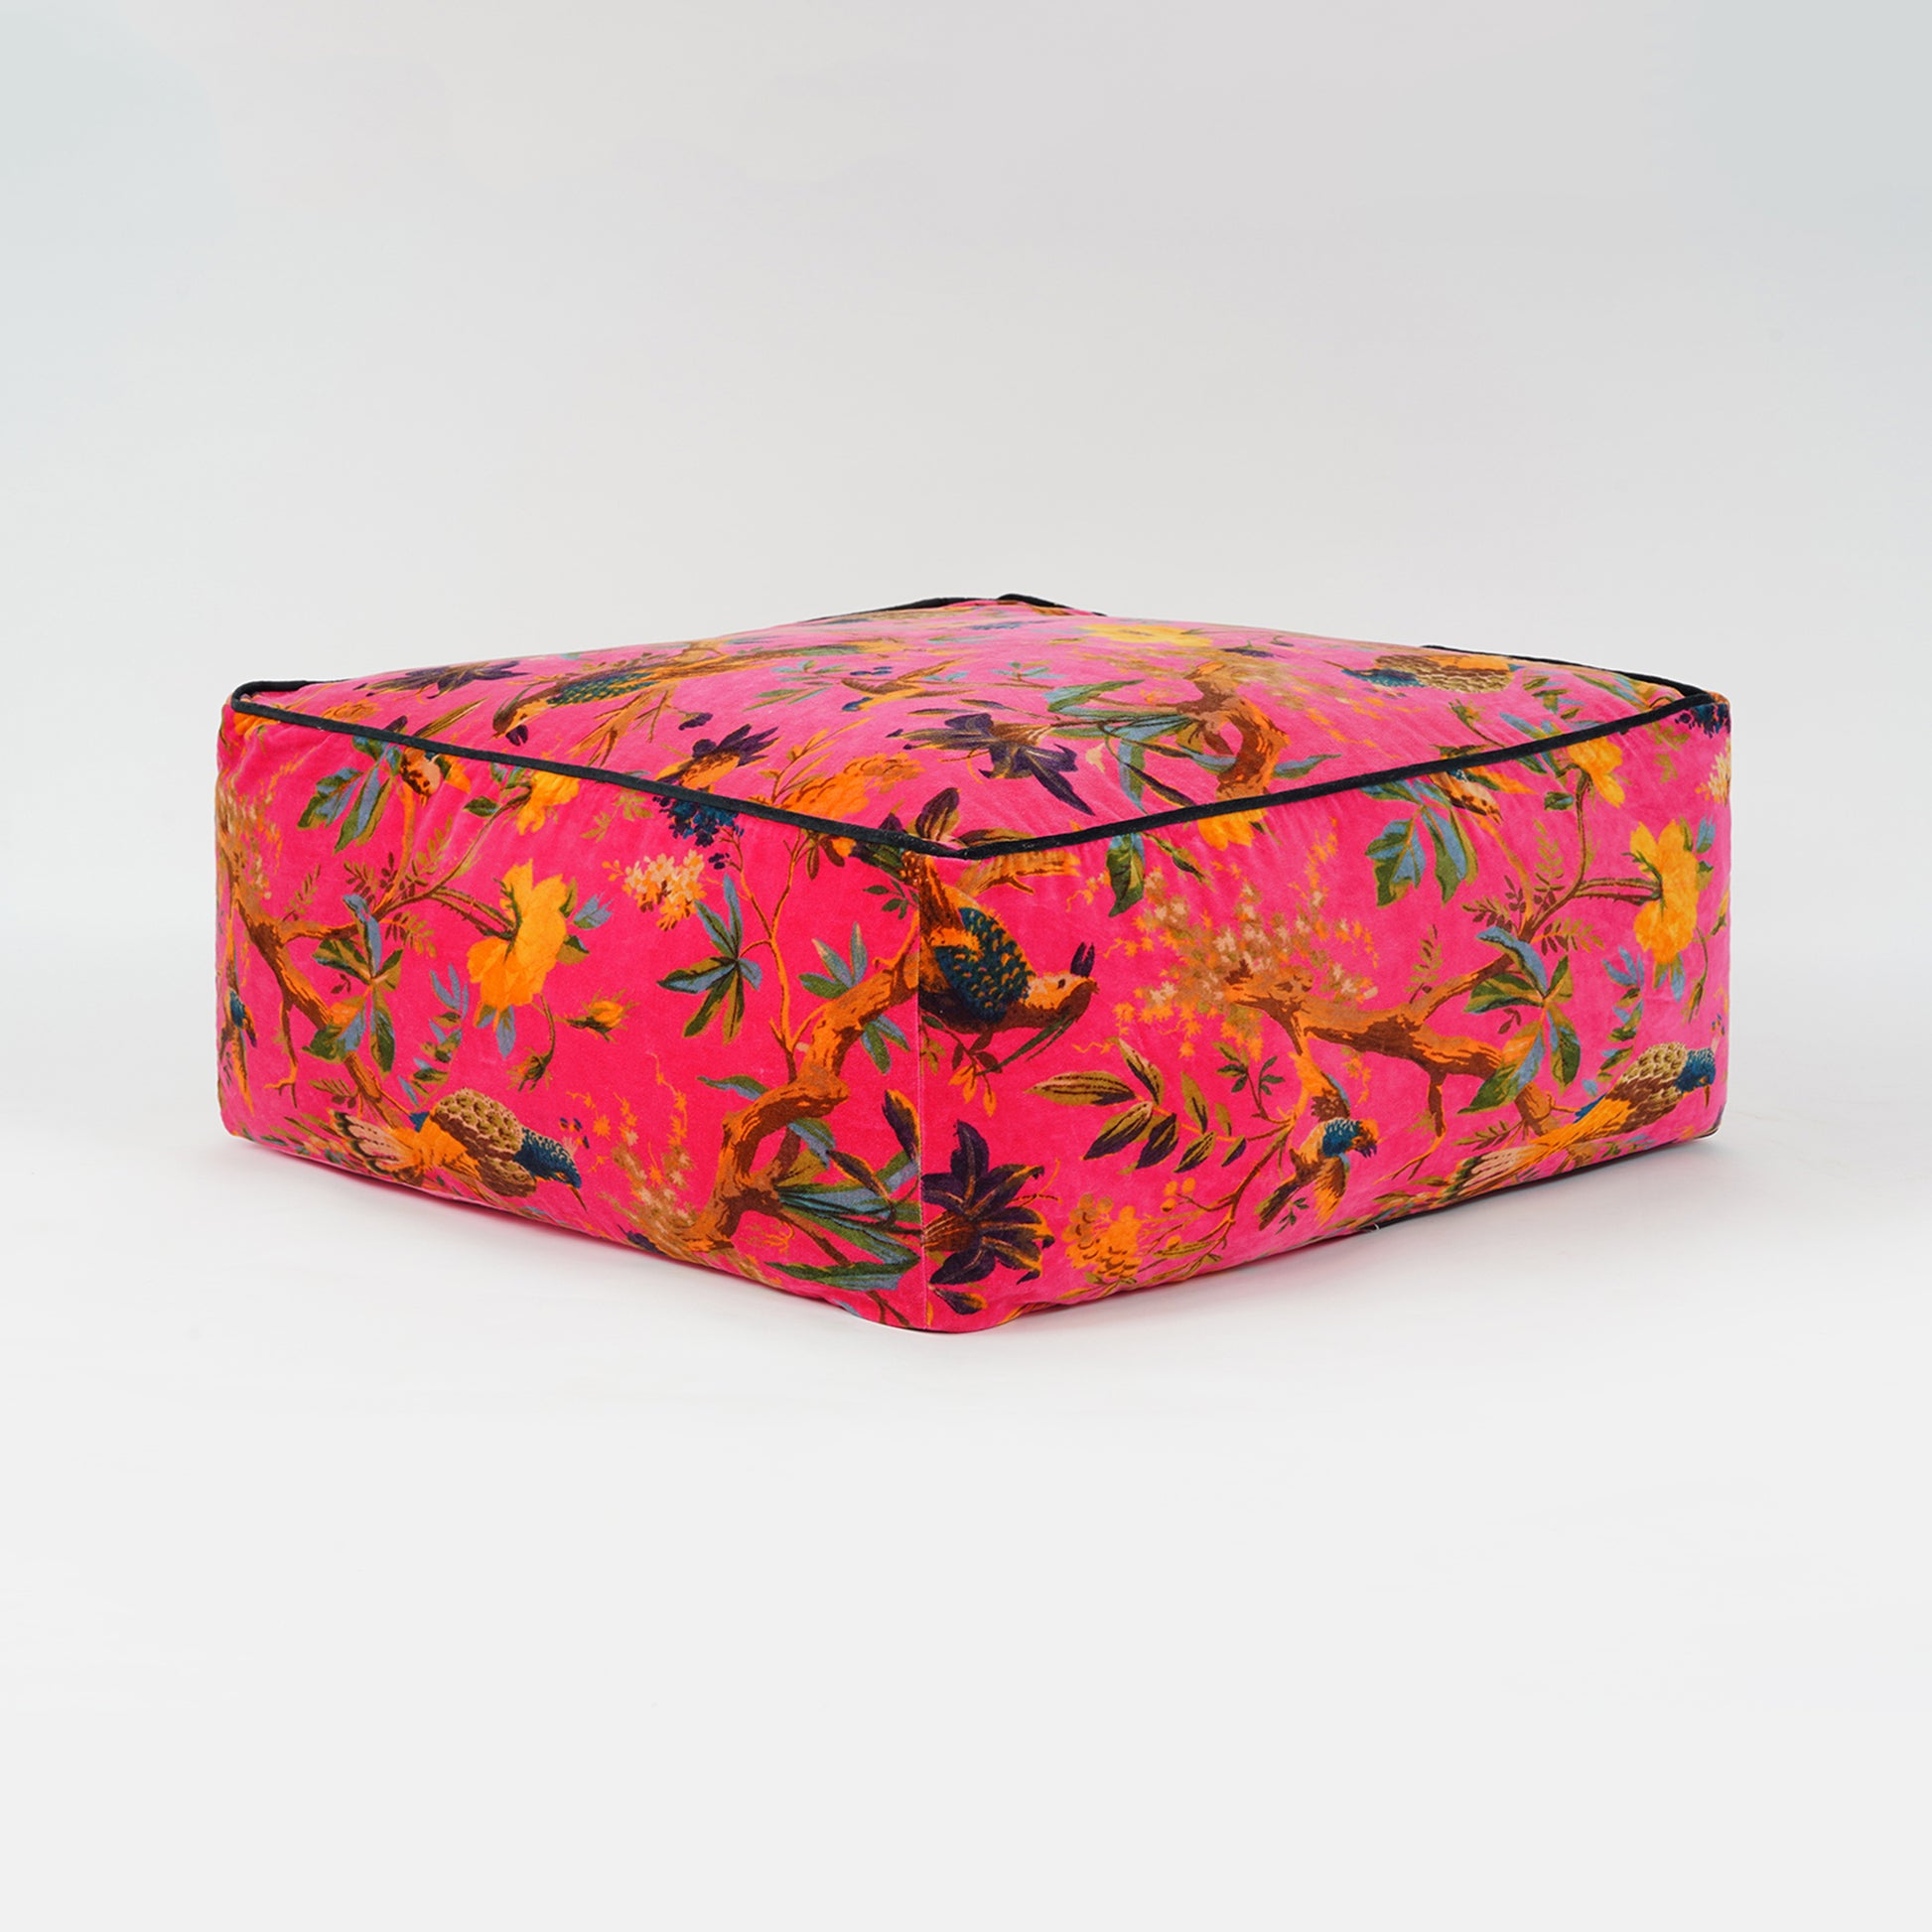 Birds of Paradise Velvet Square Ottoman / bean bag -Bright Pink - The Teal Thread